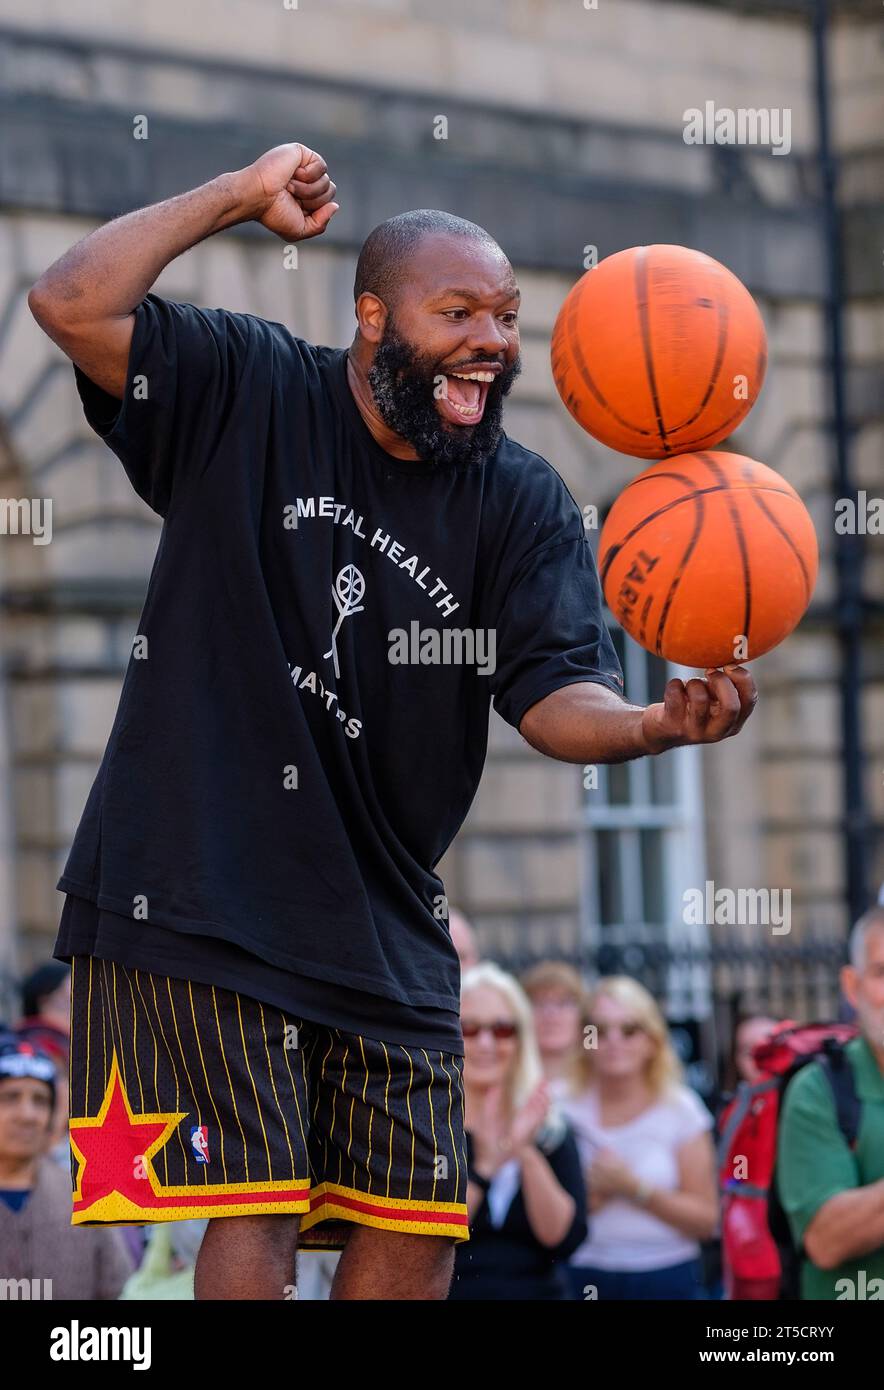 man juggling two basket balls at Edinburgh Fringe festival Stock Photo